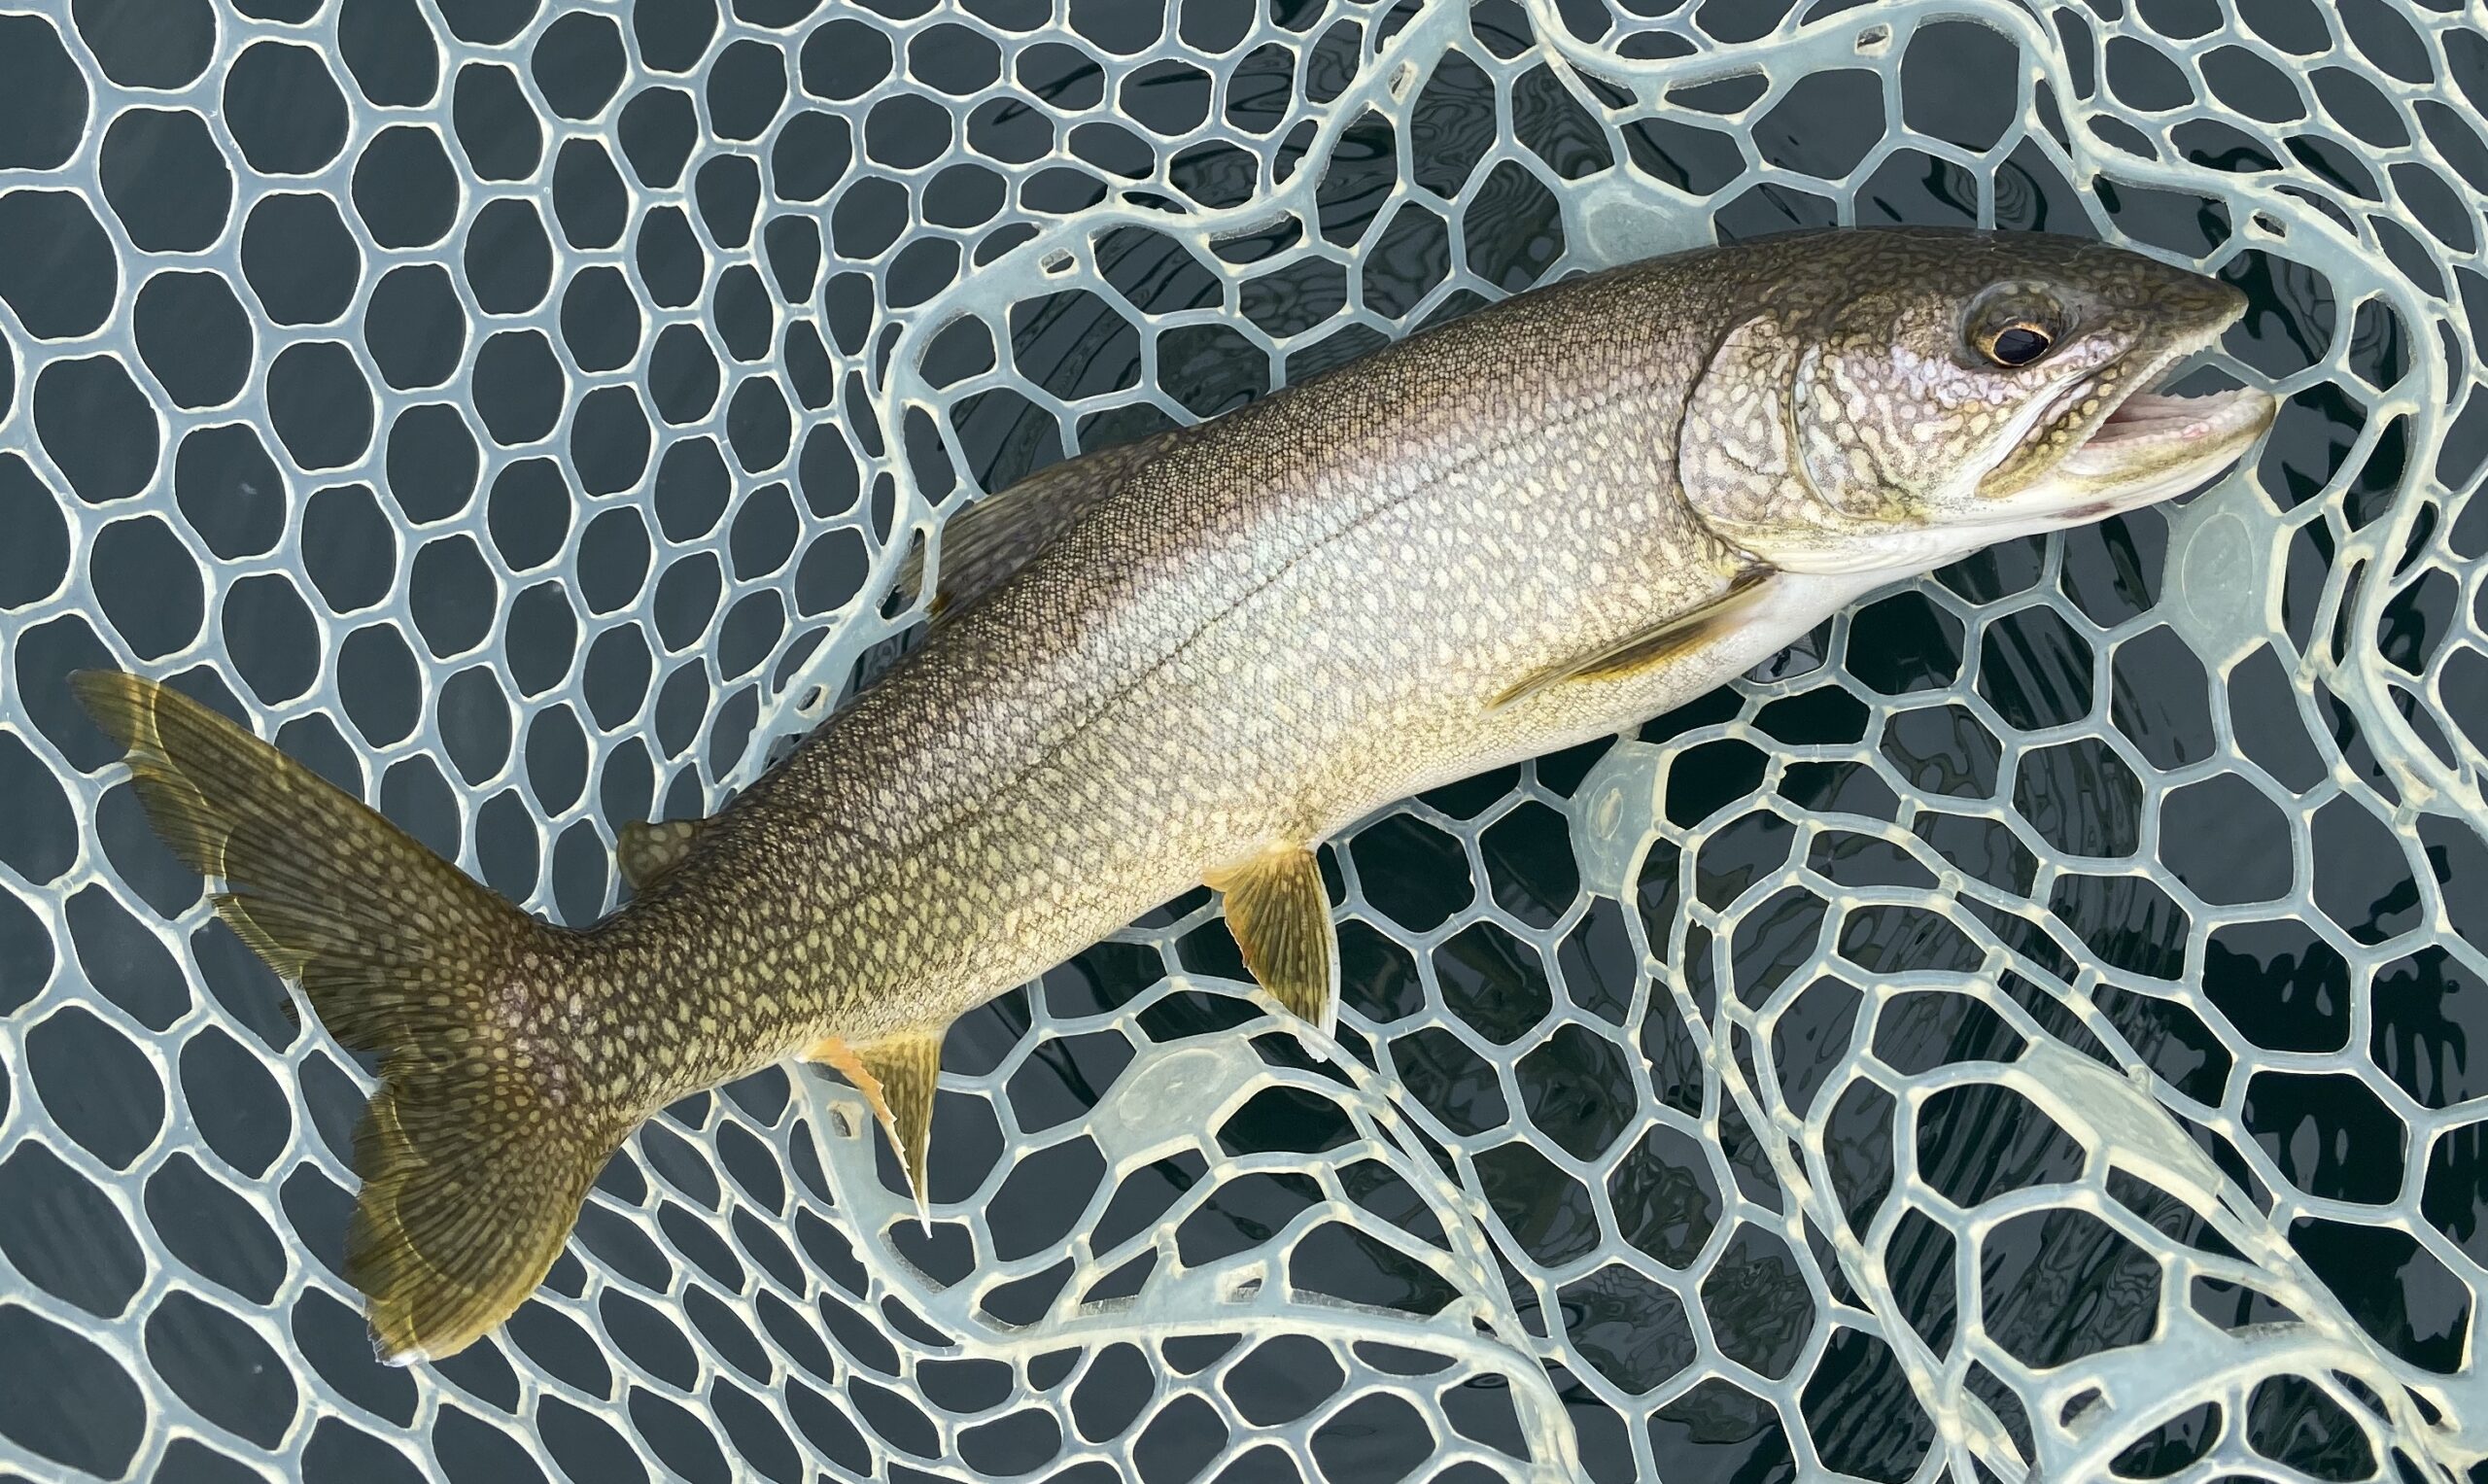 King Salmon (1 lb) – Gather Arizona Express